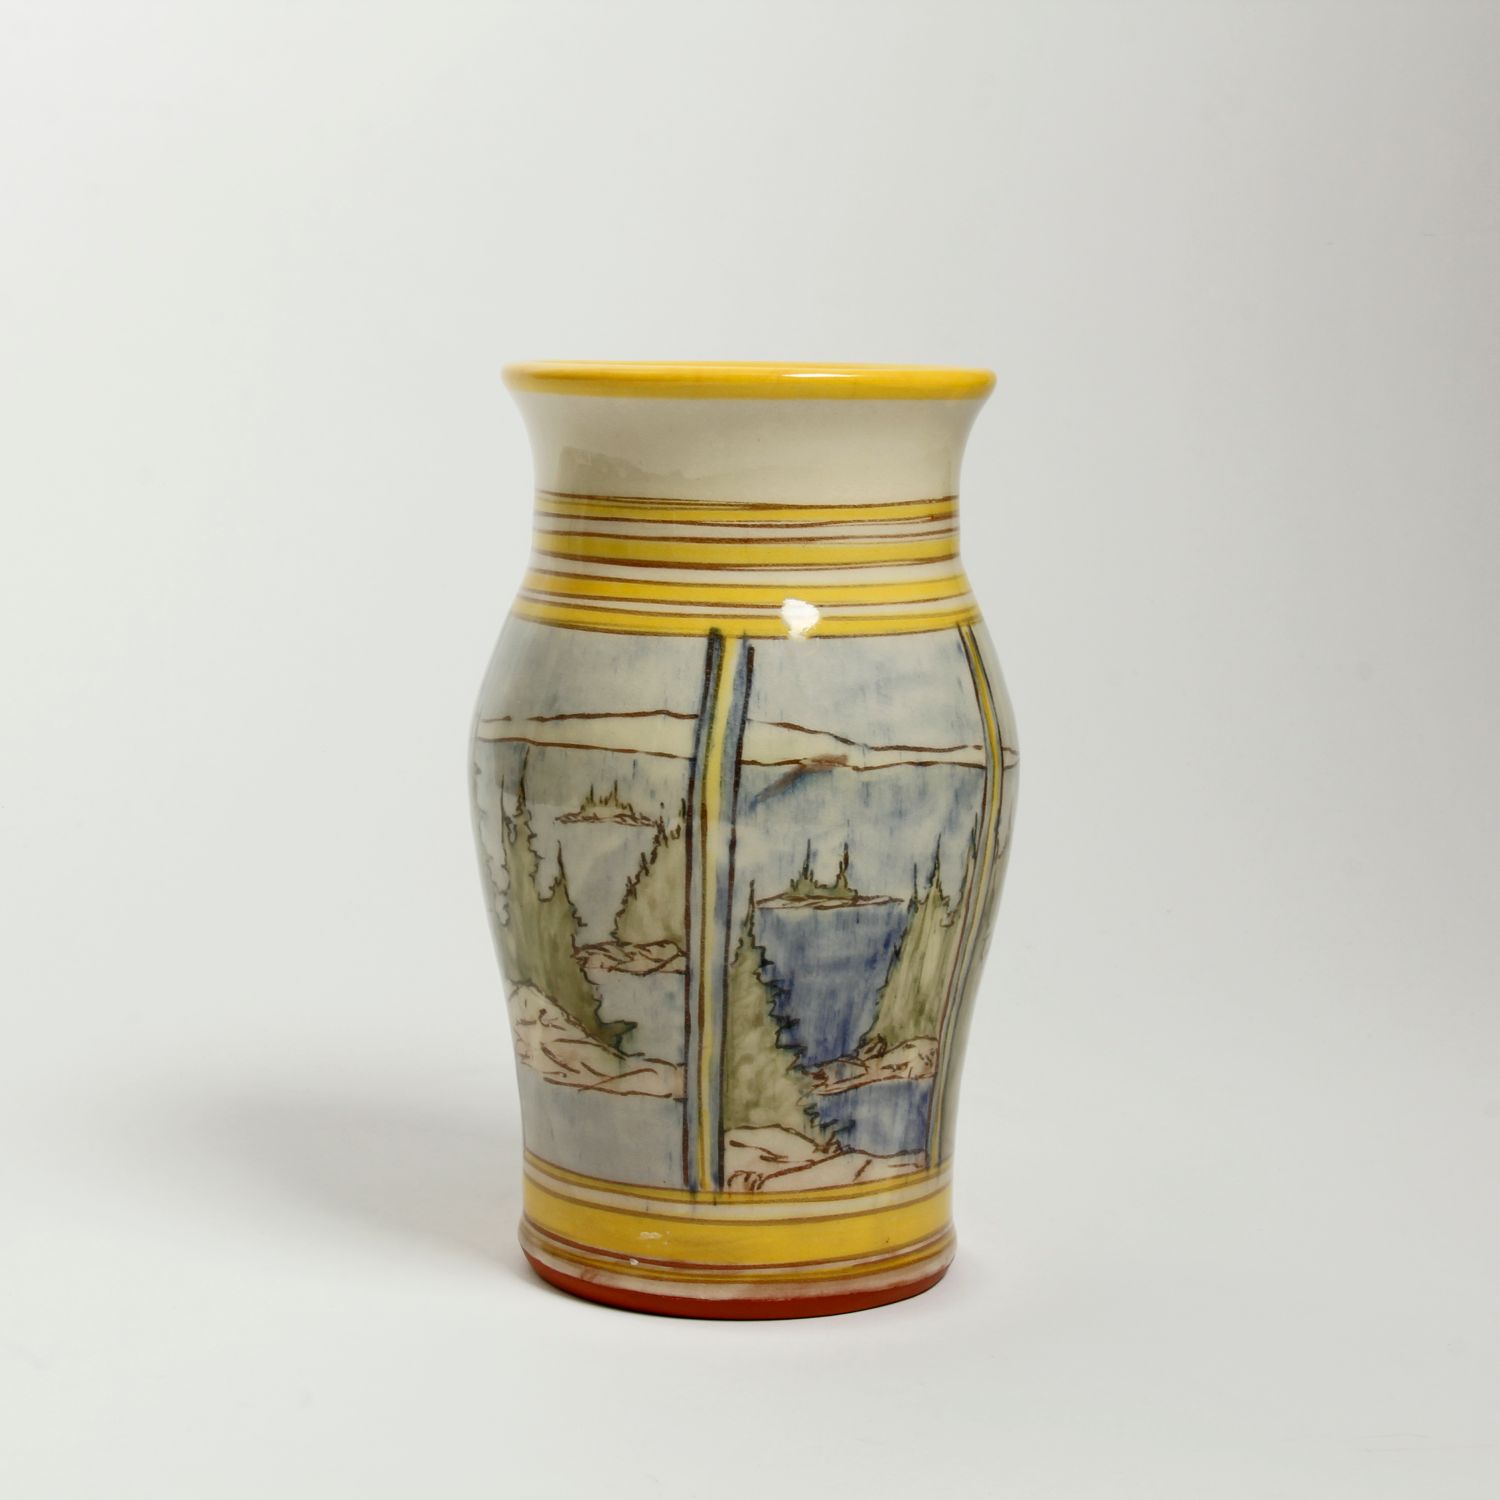 Sean Robinson: Large Vase Product Image 1 of 4